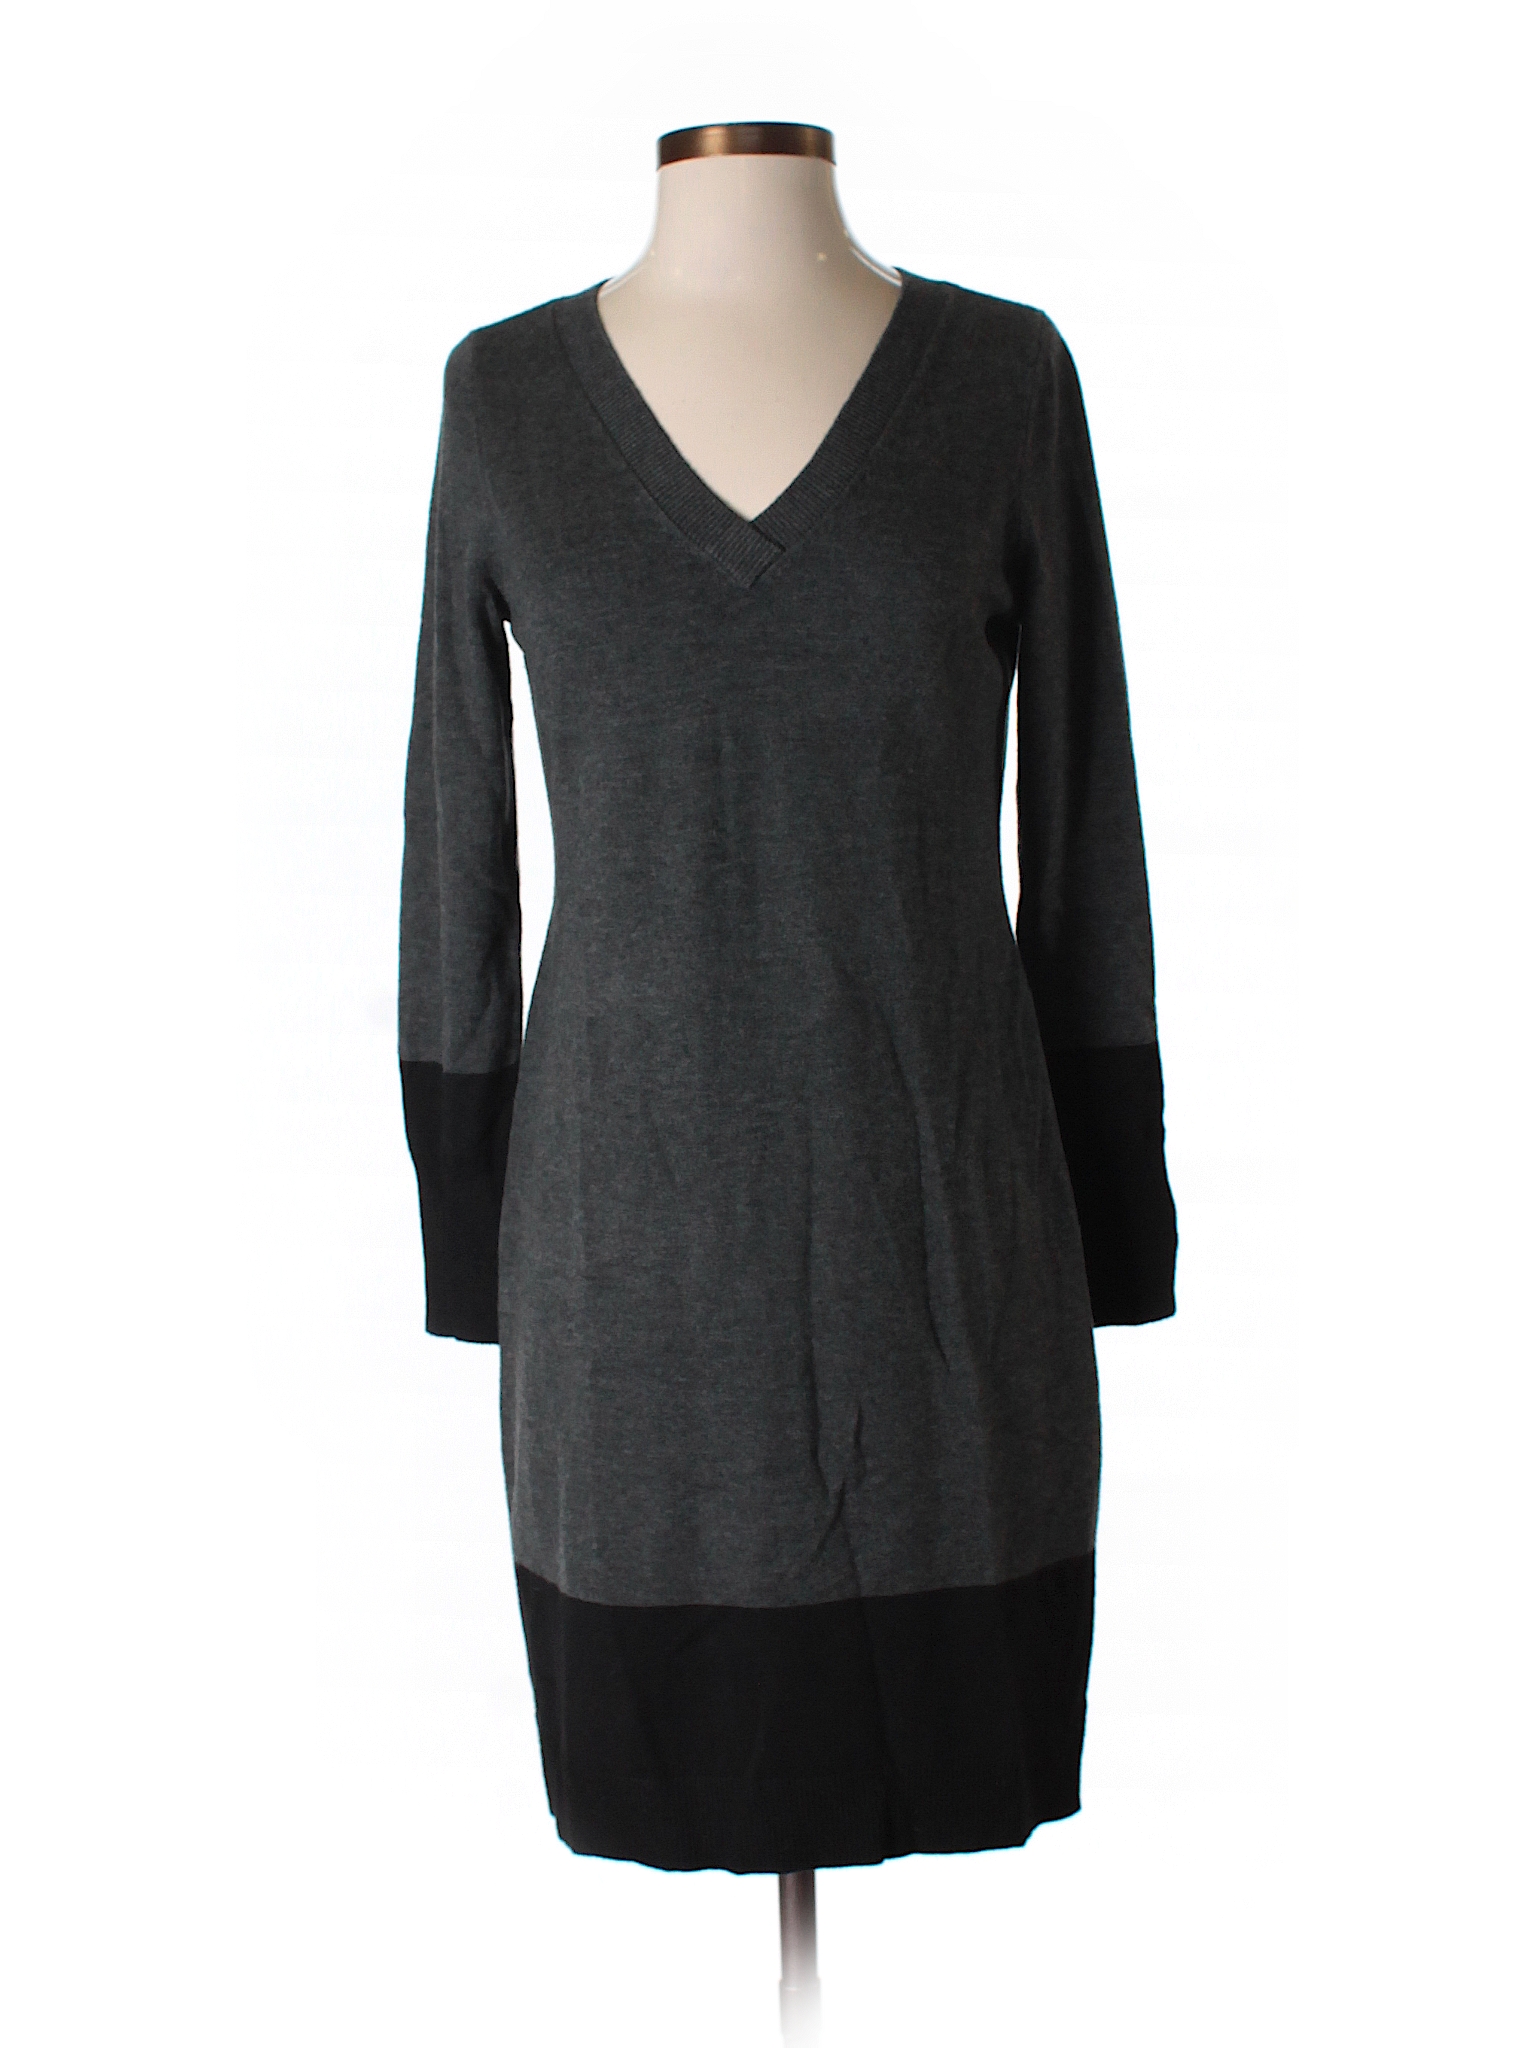 Ann Taylor Color Block Gray Sweater Dress Size M (Petite) - 79% off ...